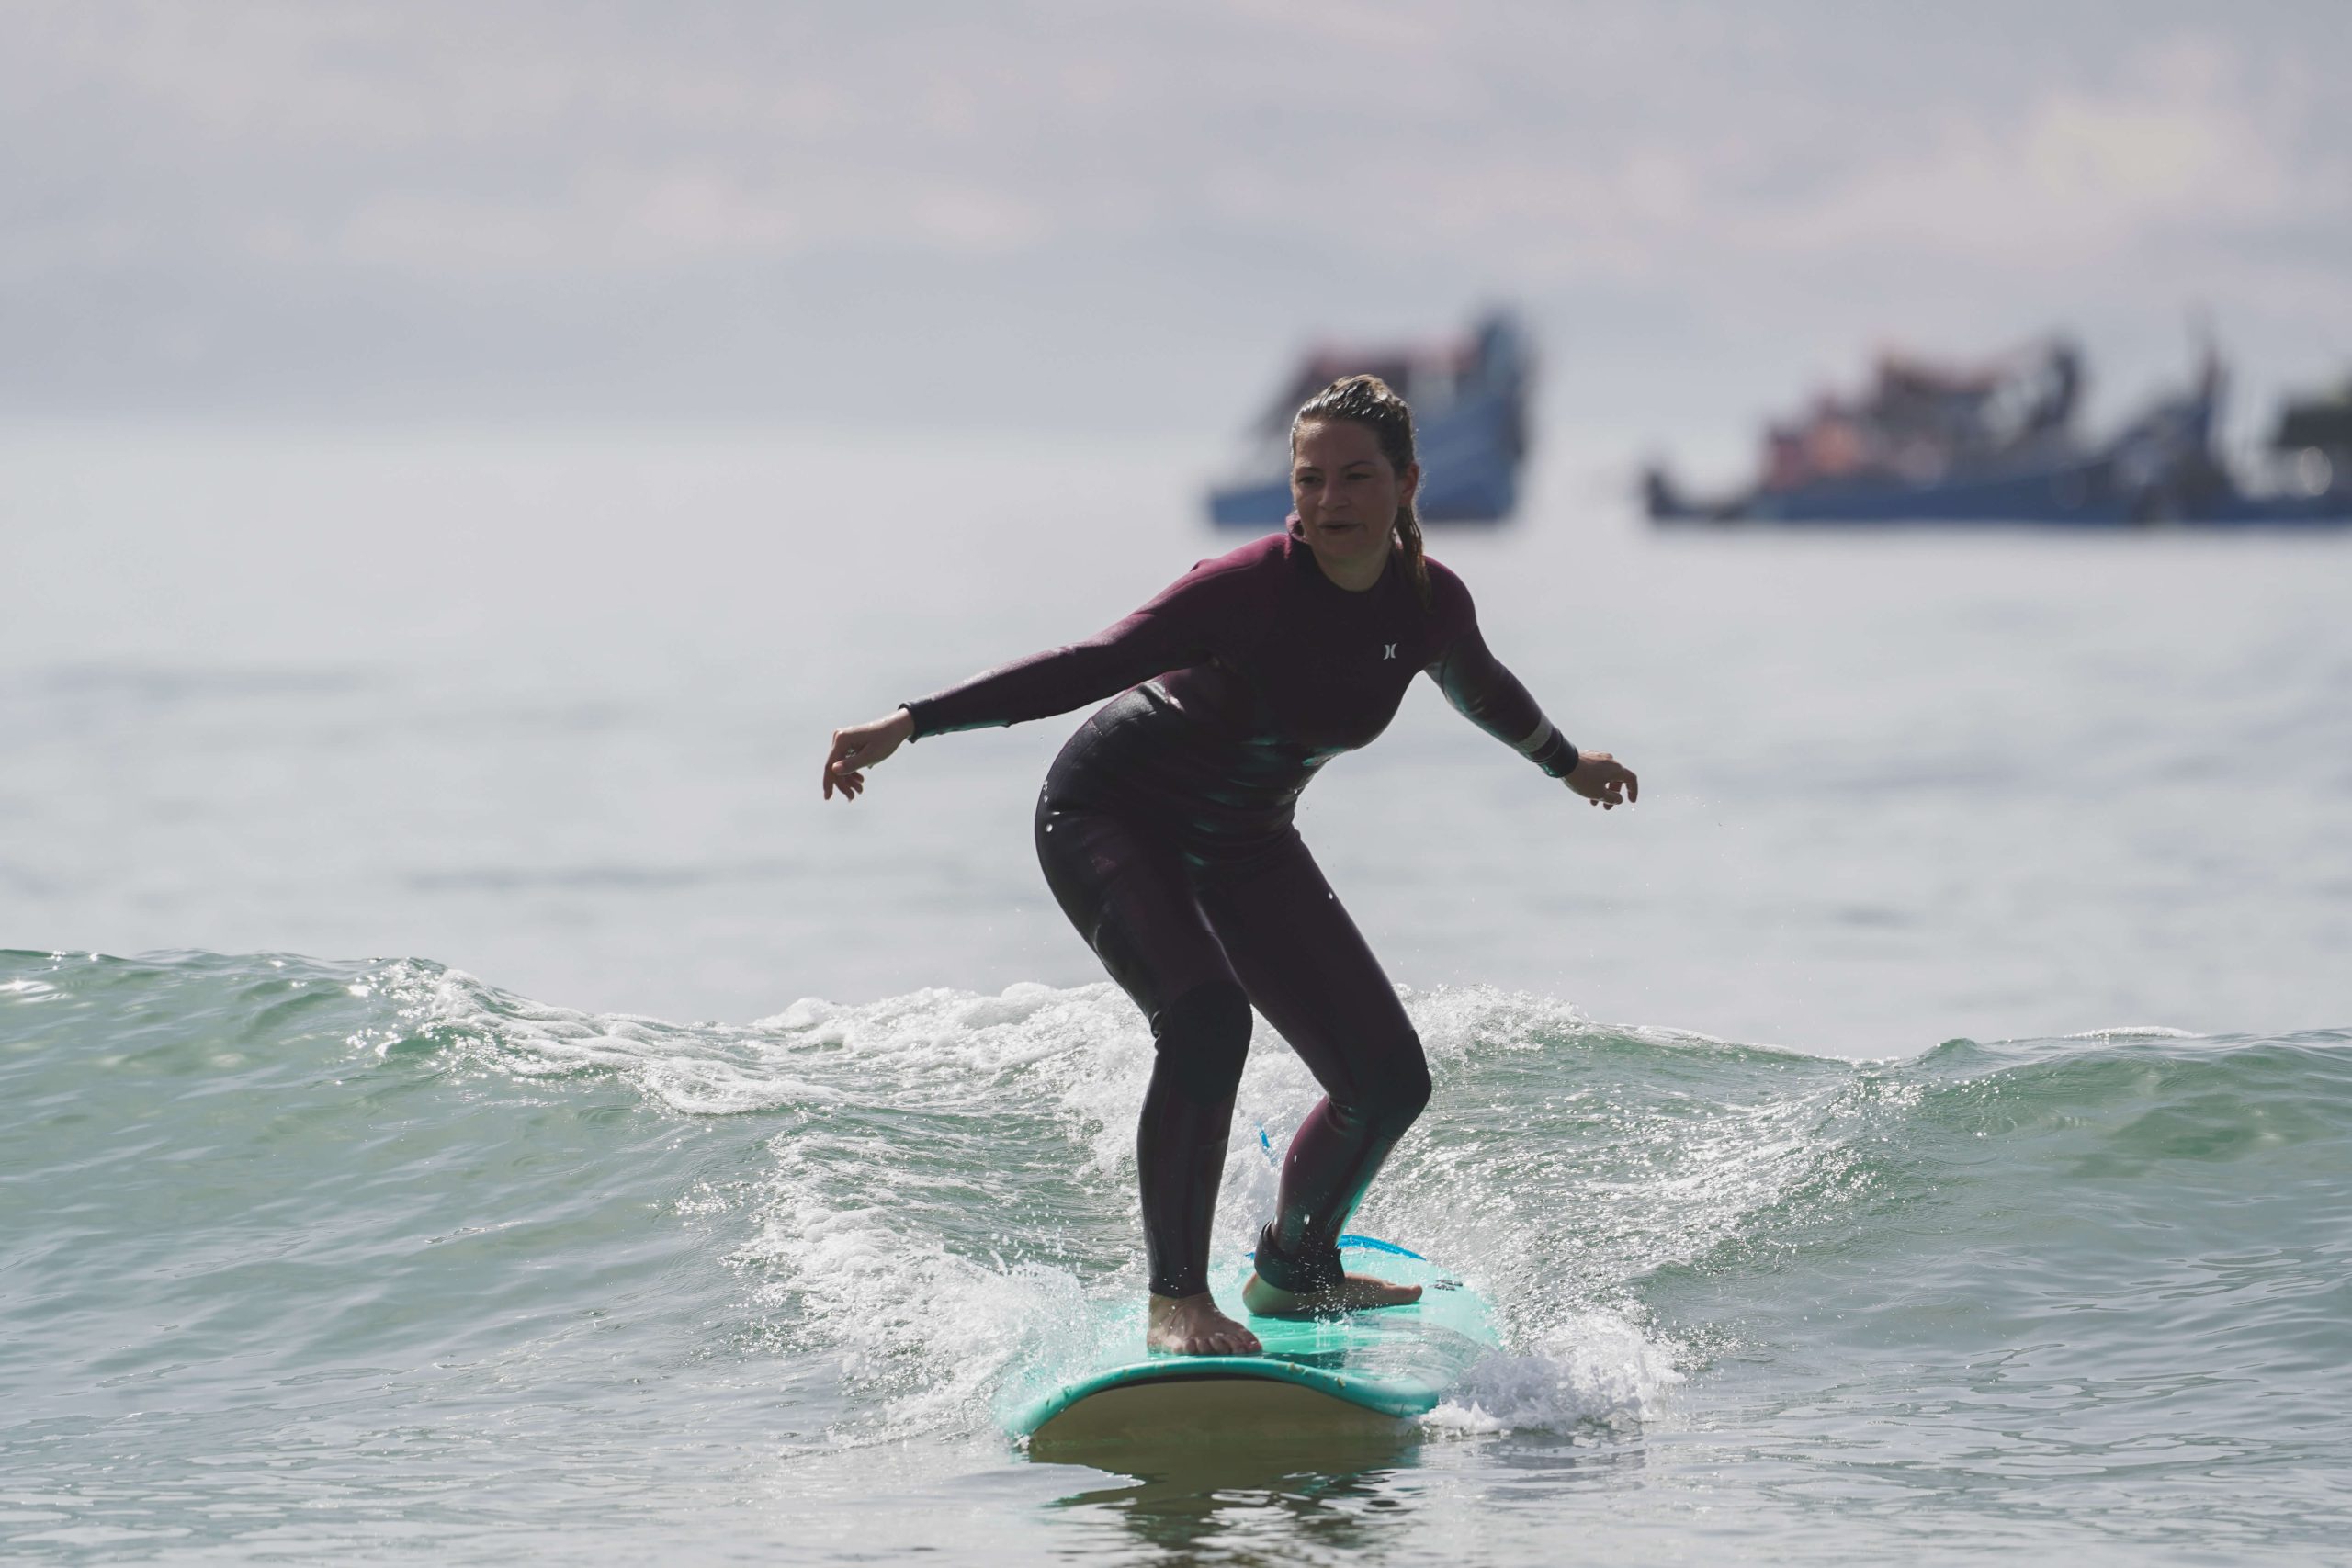 Beginner surfer girl surfing small green wave